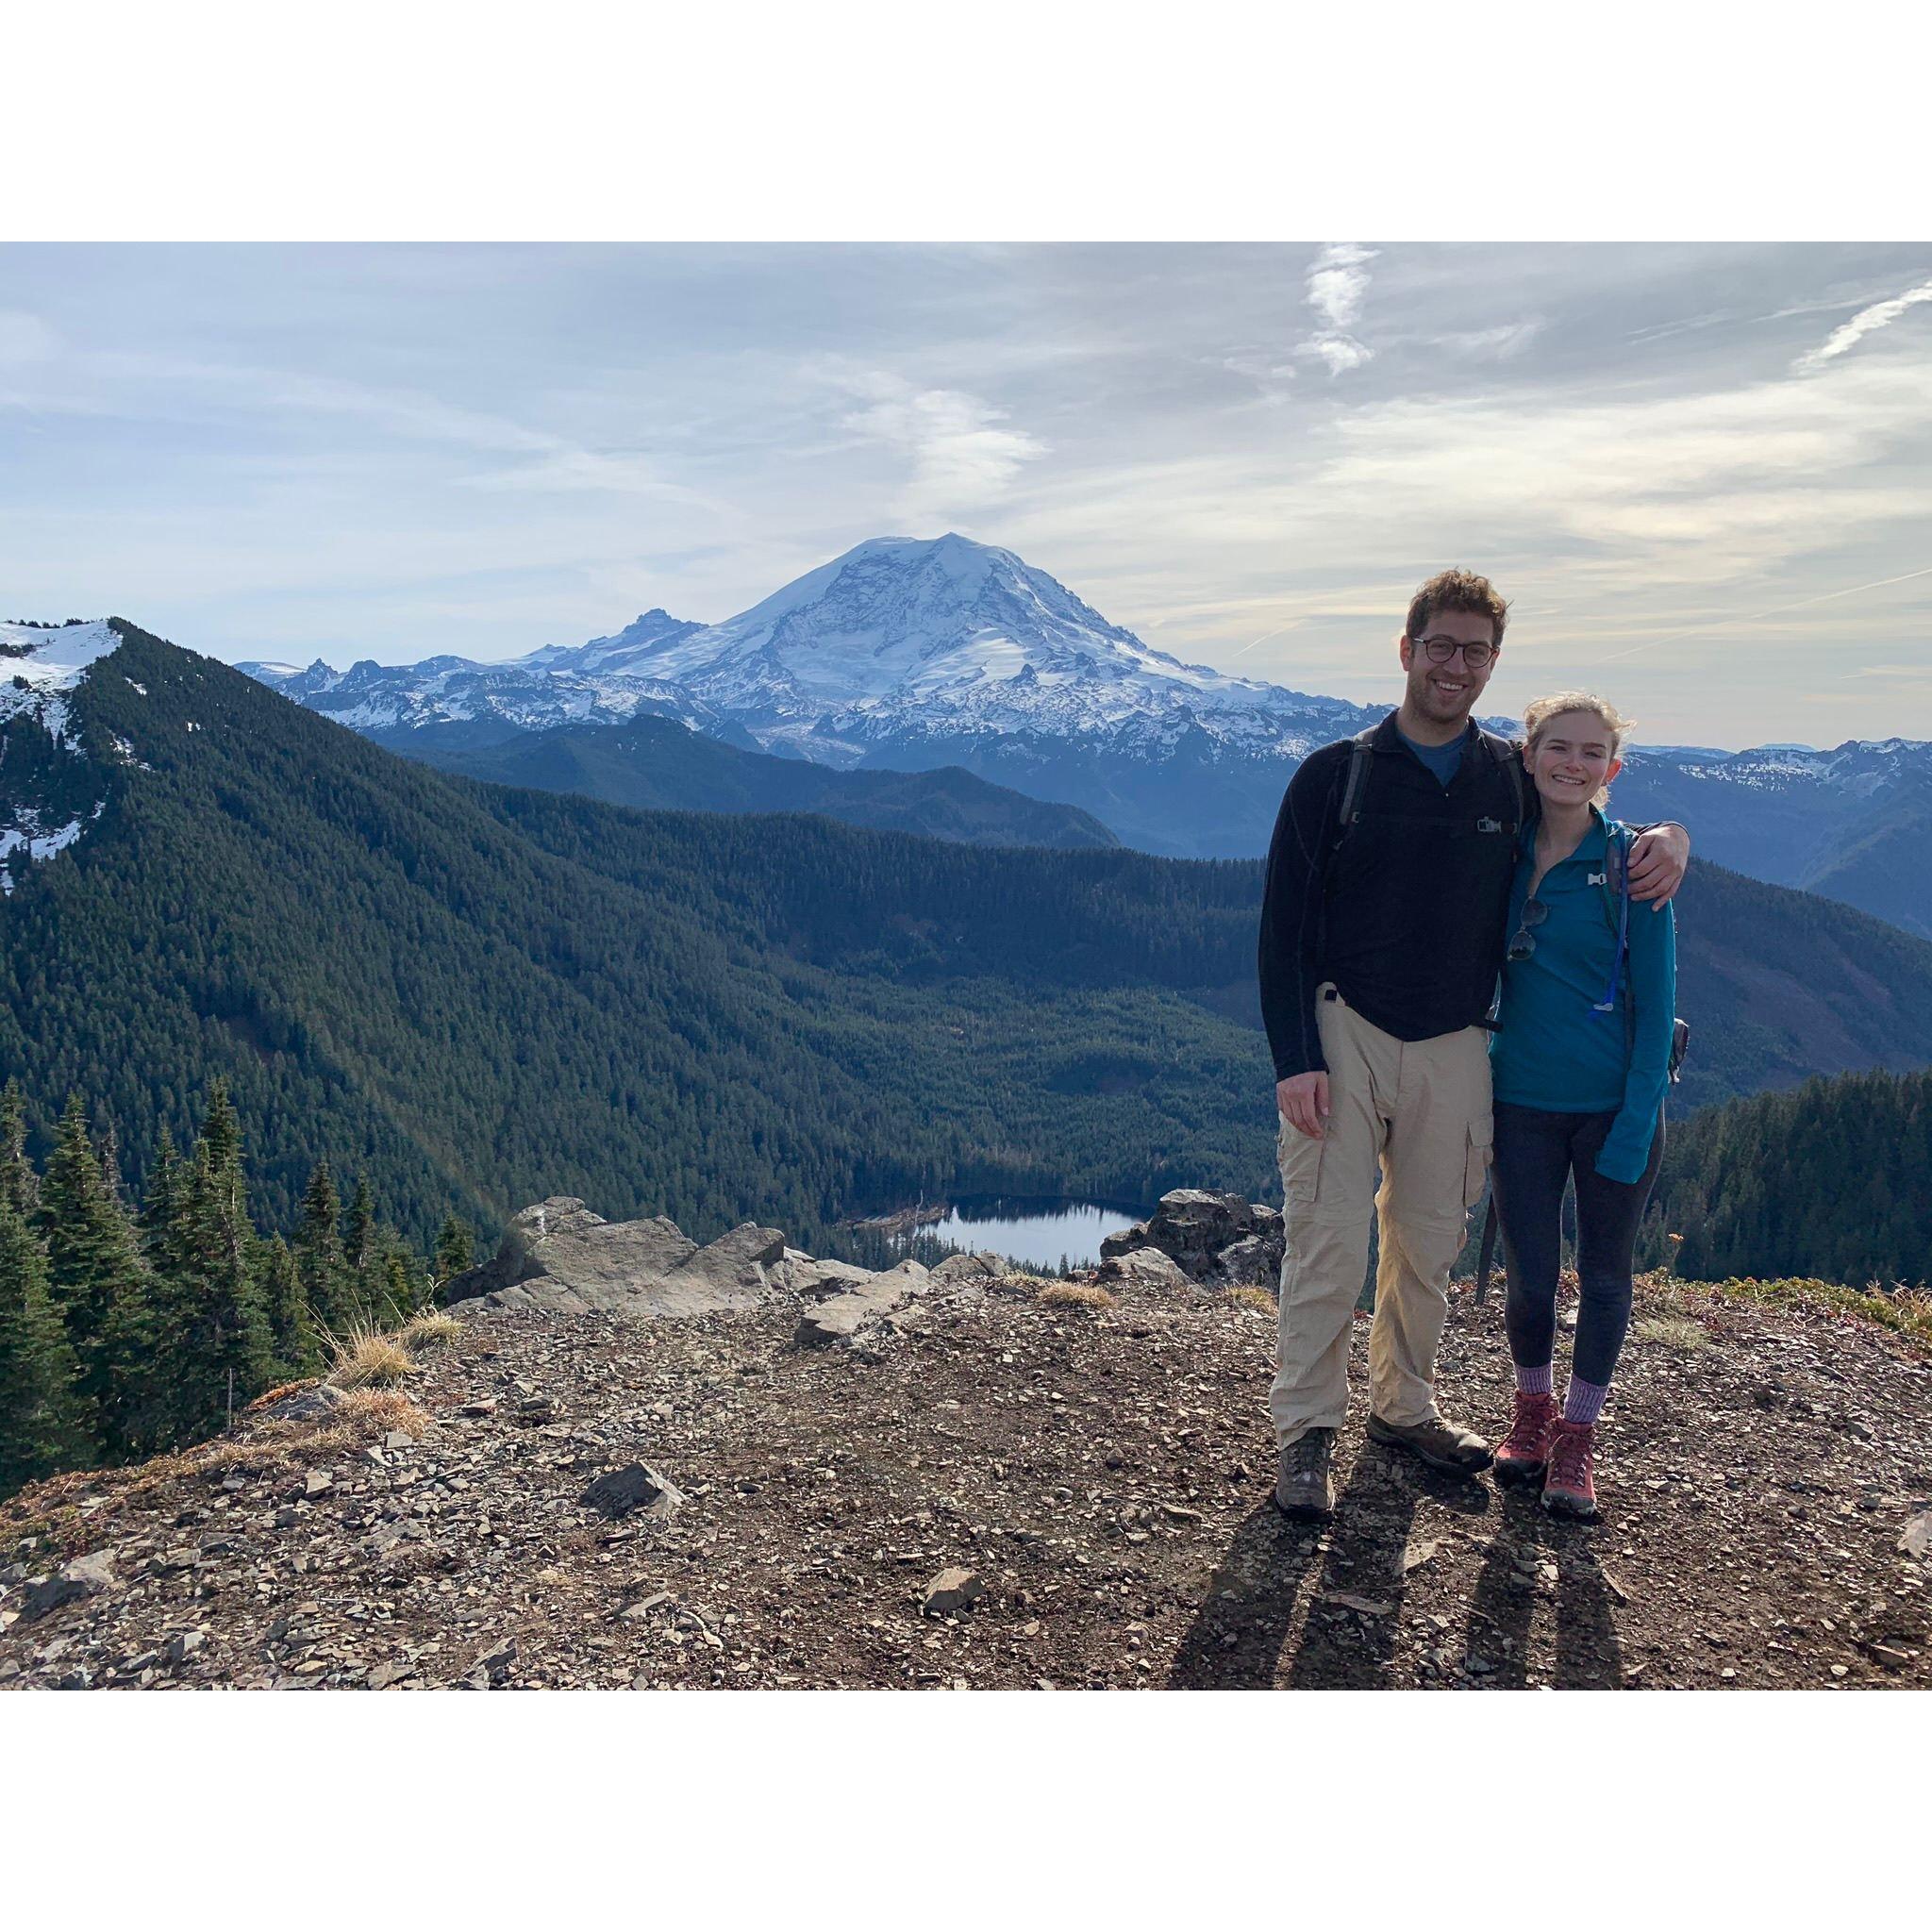 We peaked with Mt. Rainier!